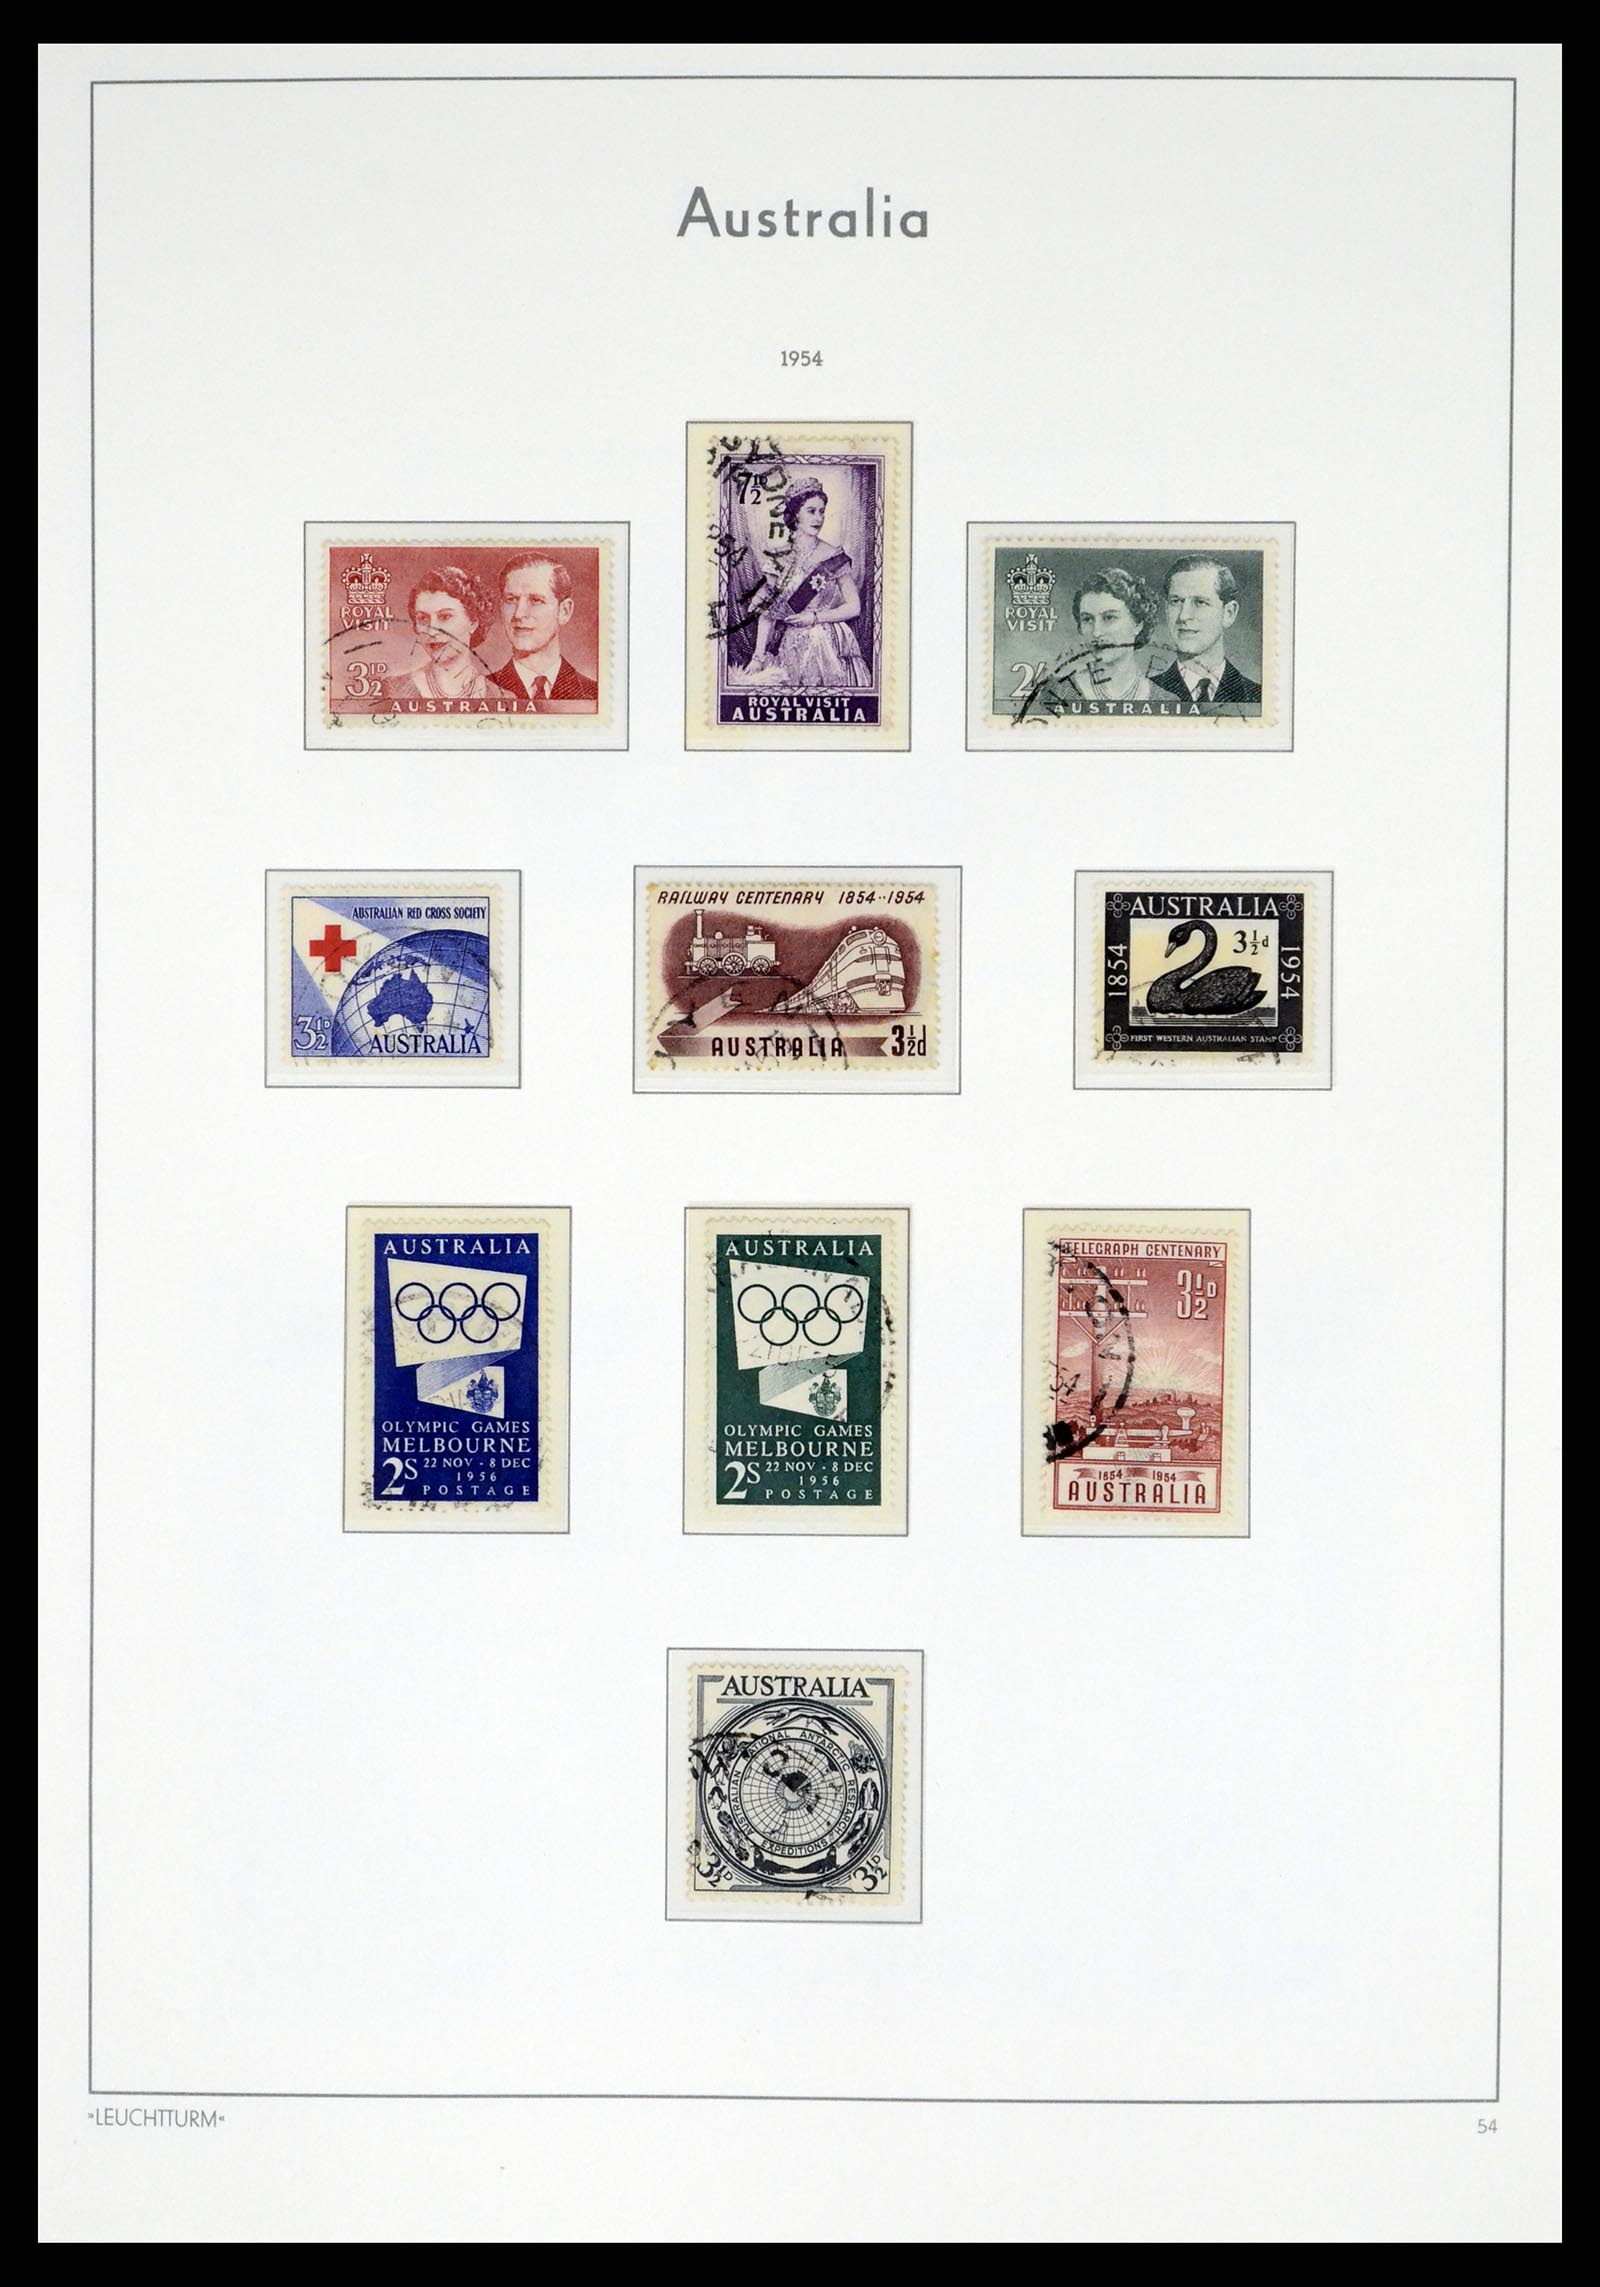 37623 029 - Stamp collection 37623 Australia 1913-1995.